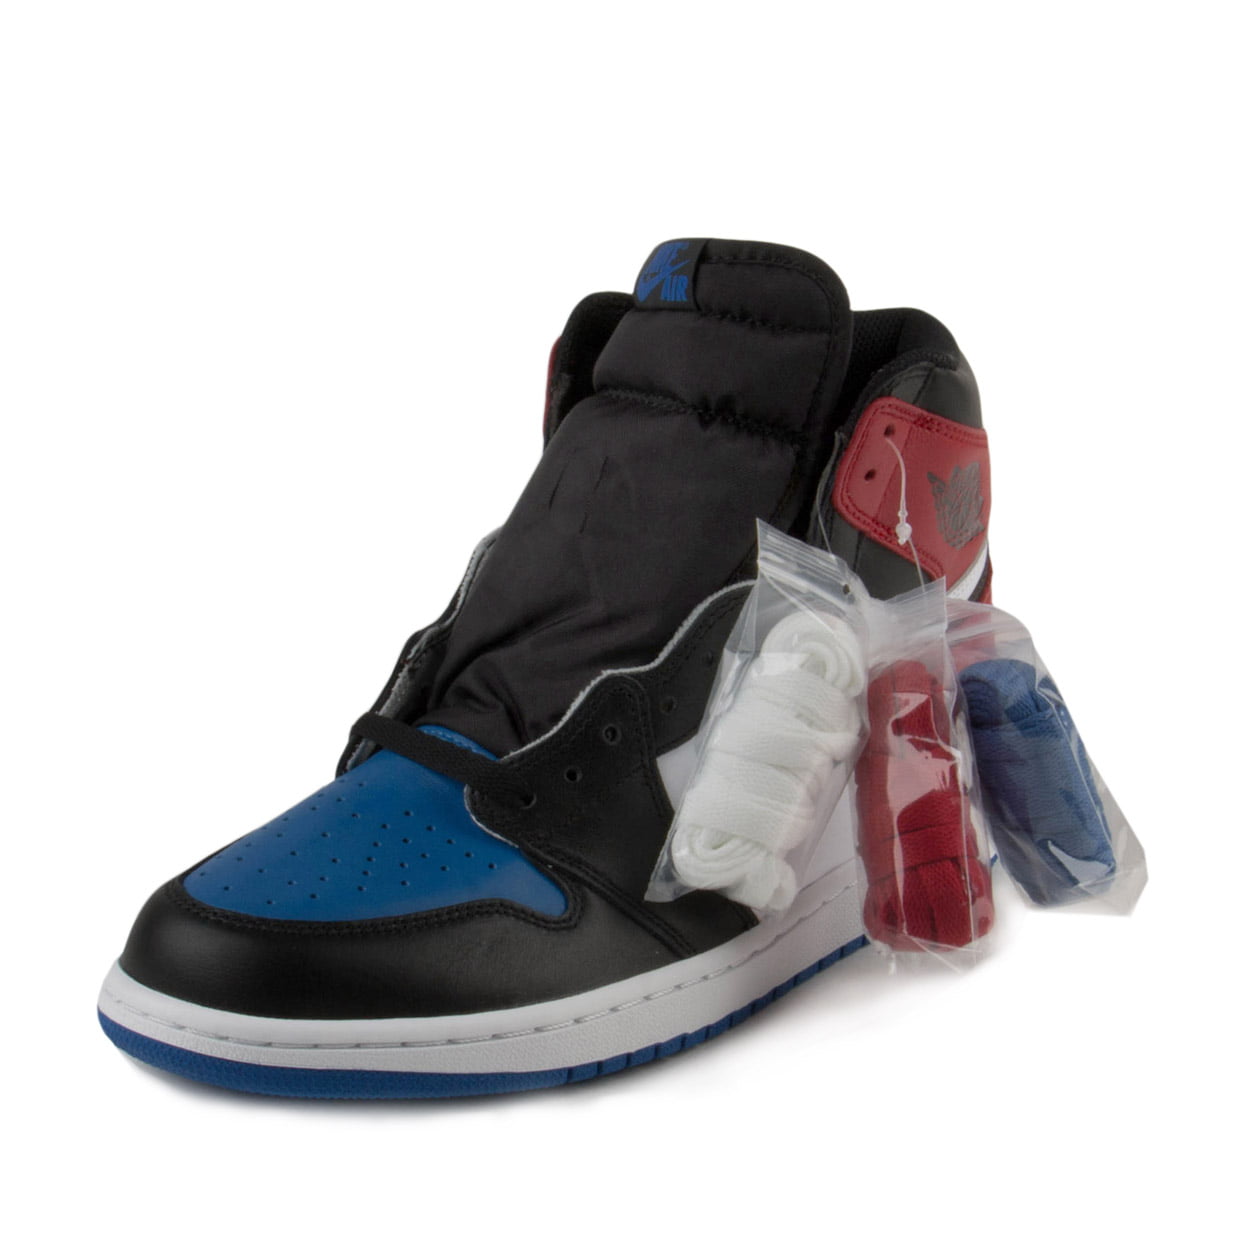 Nike Air Jordan 1 Retro High OG NRG 861428 007